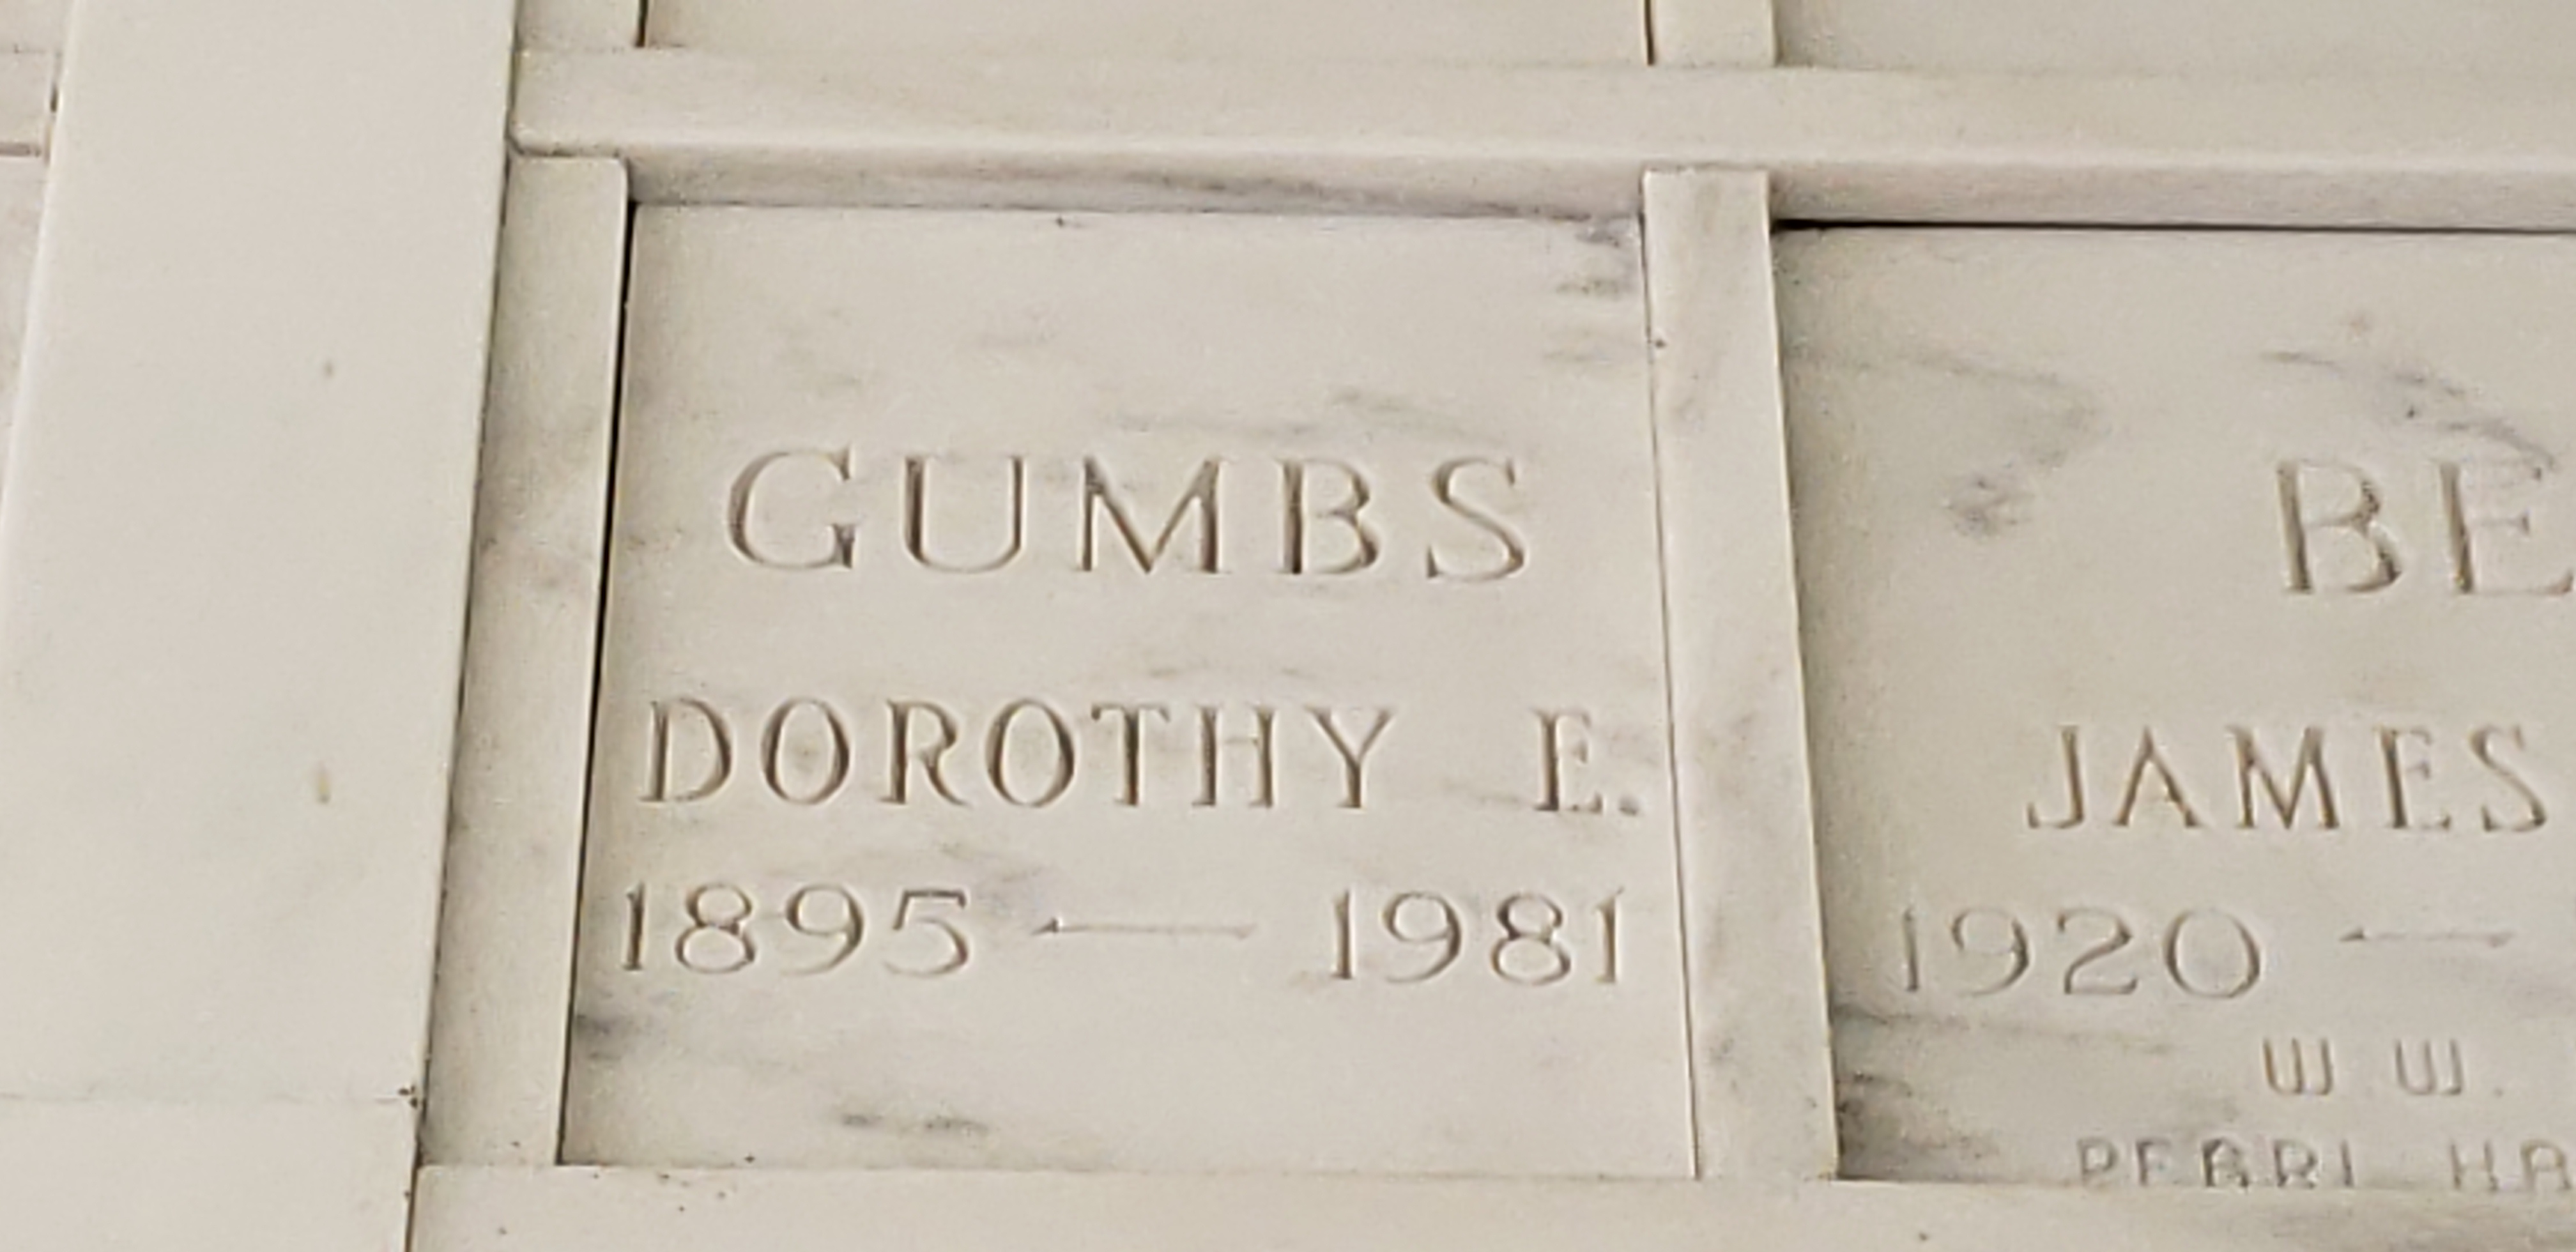 Dorothy E Gumbs